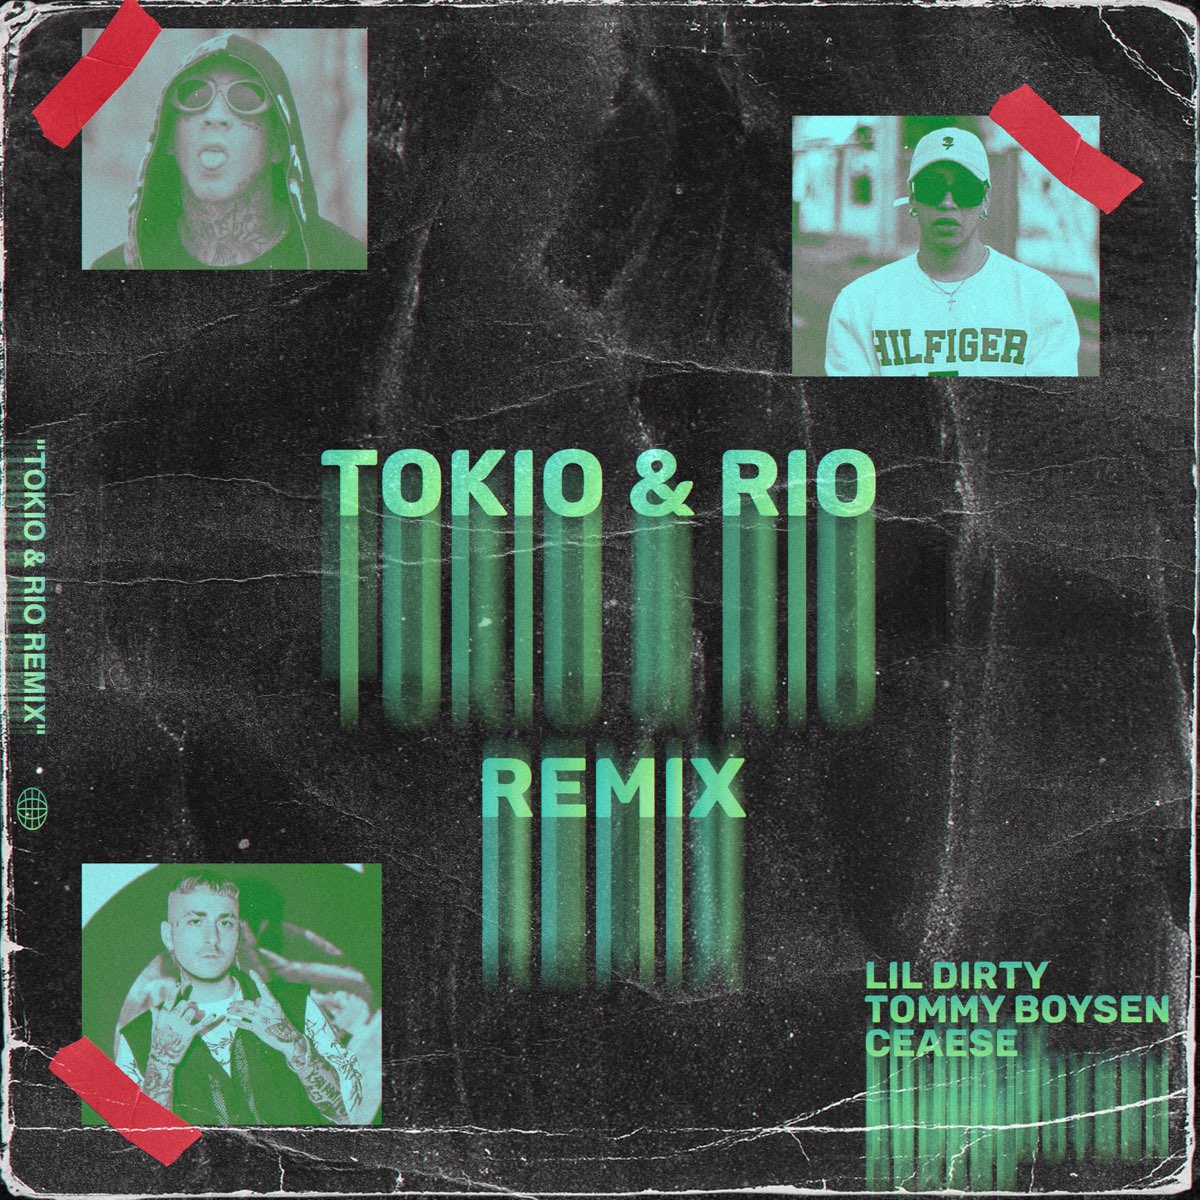 Rio remix. Lil Dirt.